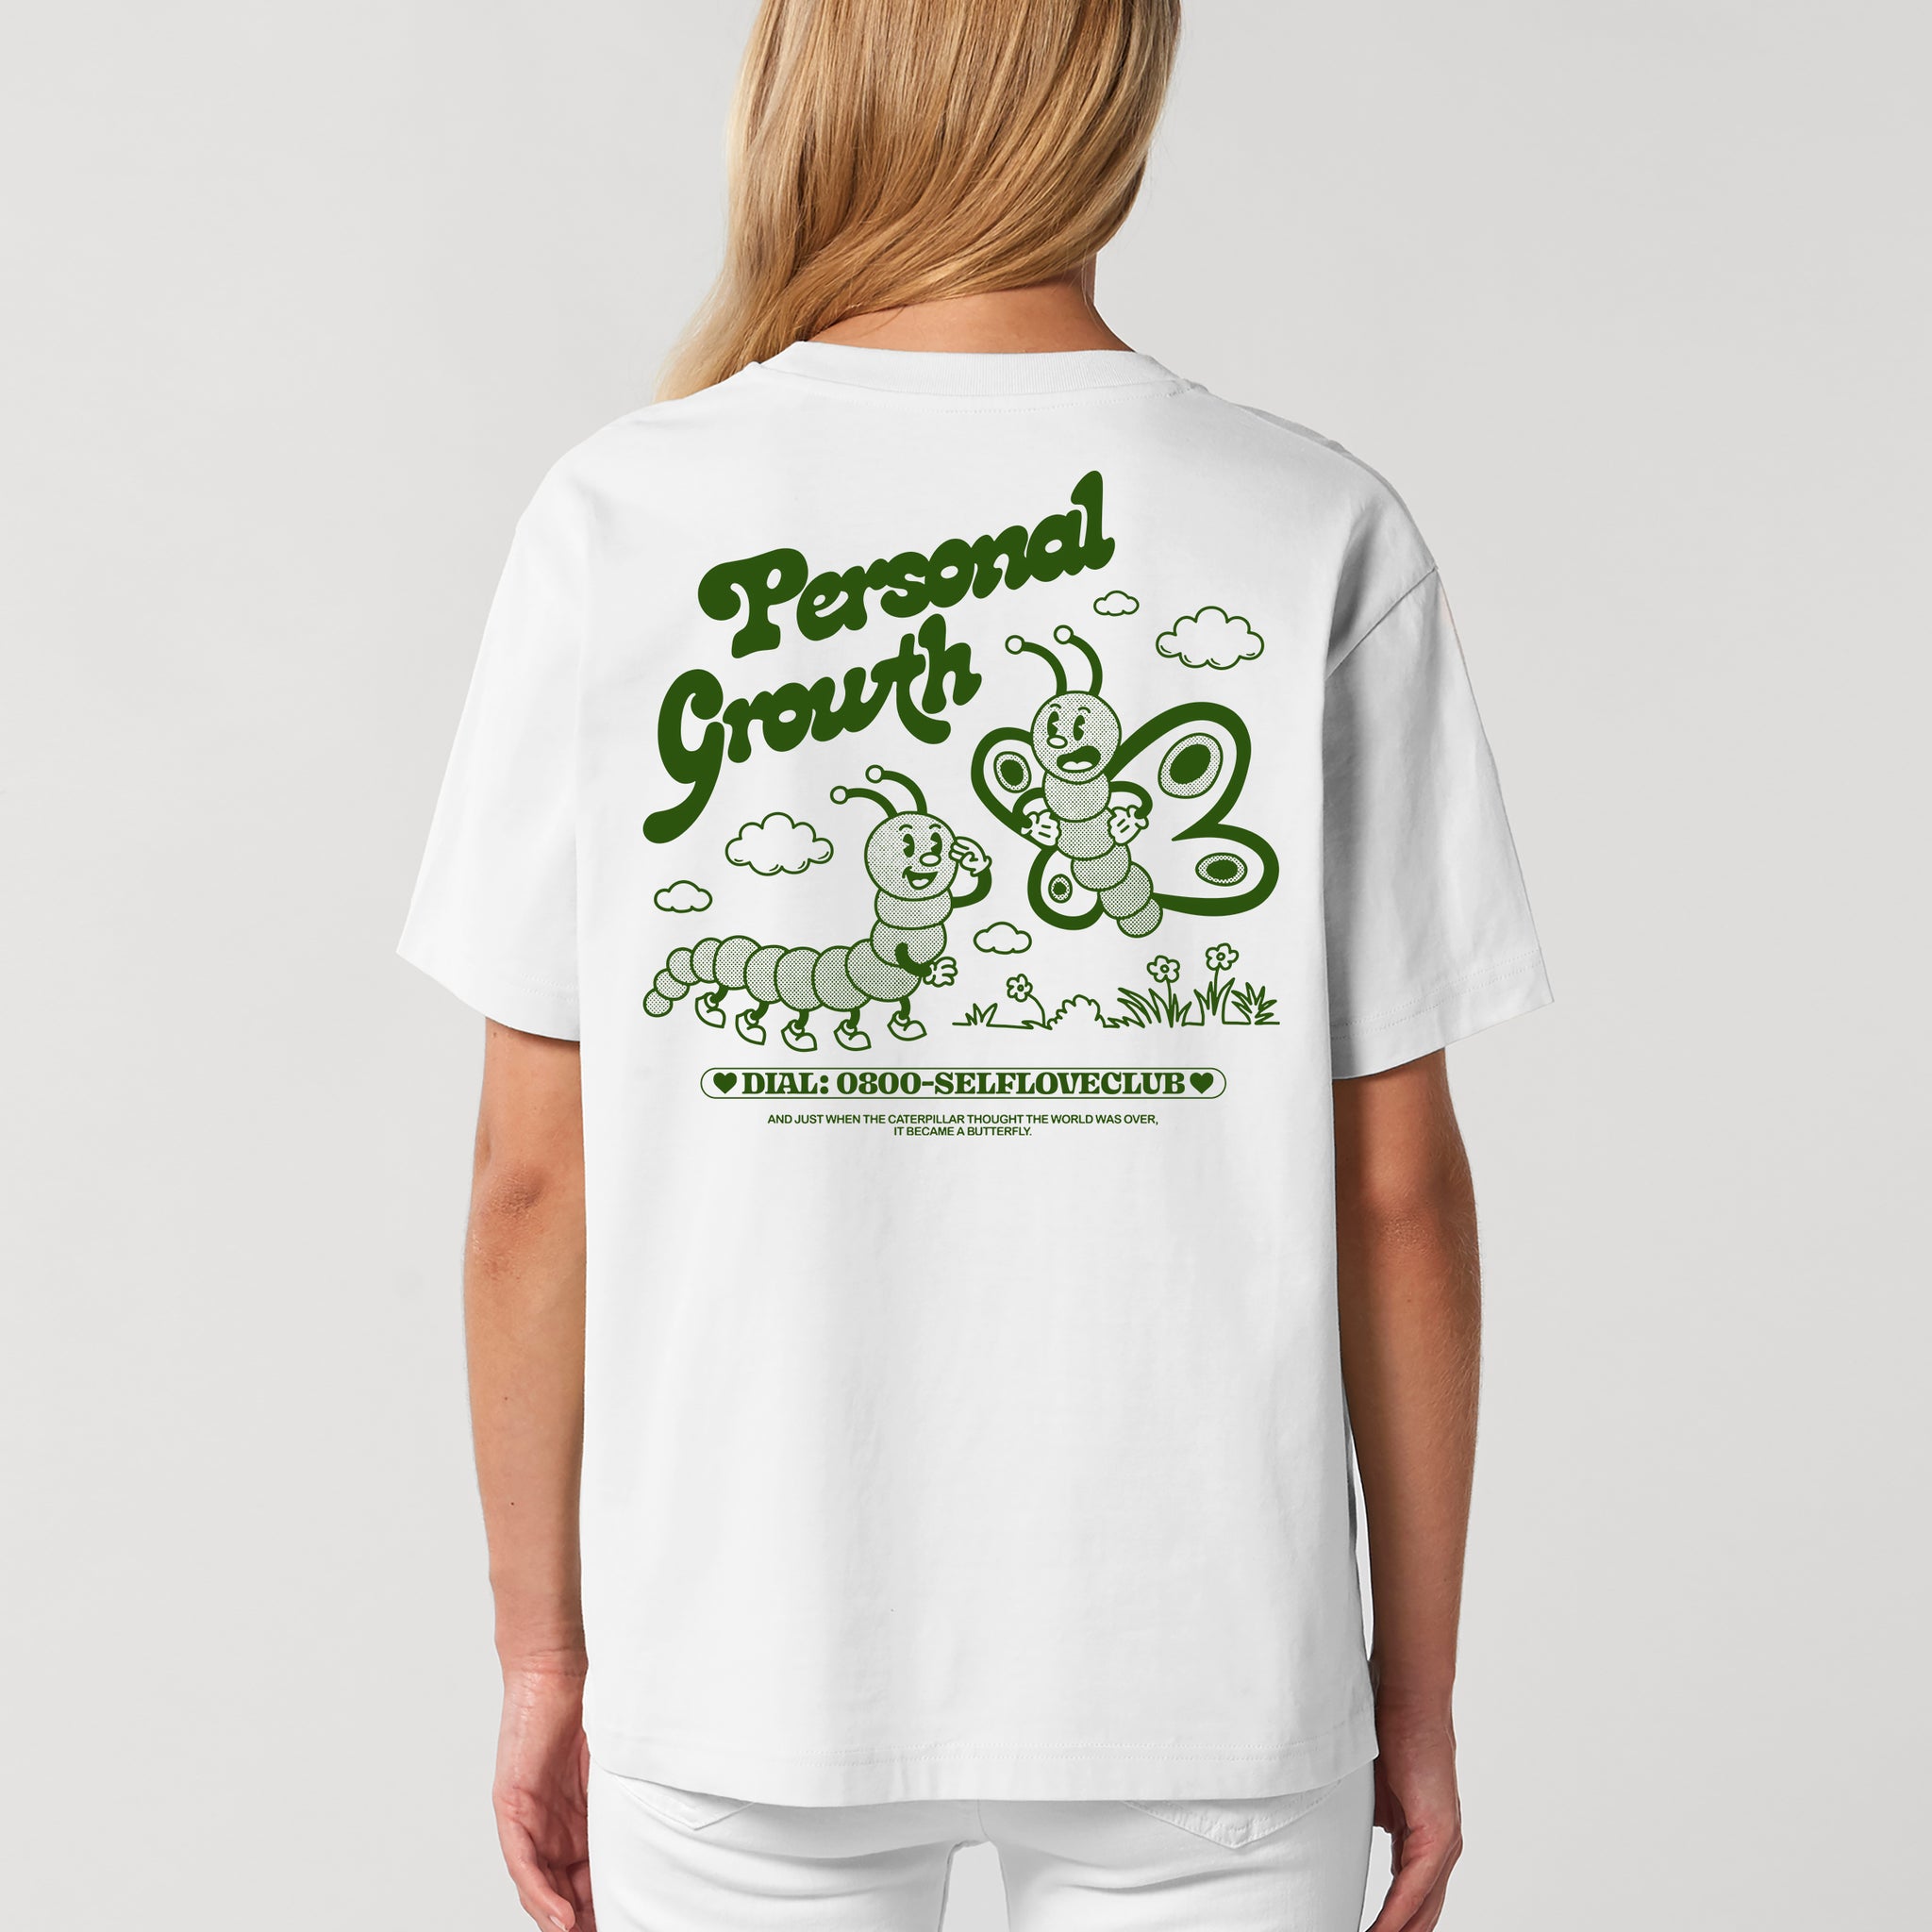 'Personal Growth' Short Sleeve Organic Cotton T-shirt